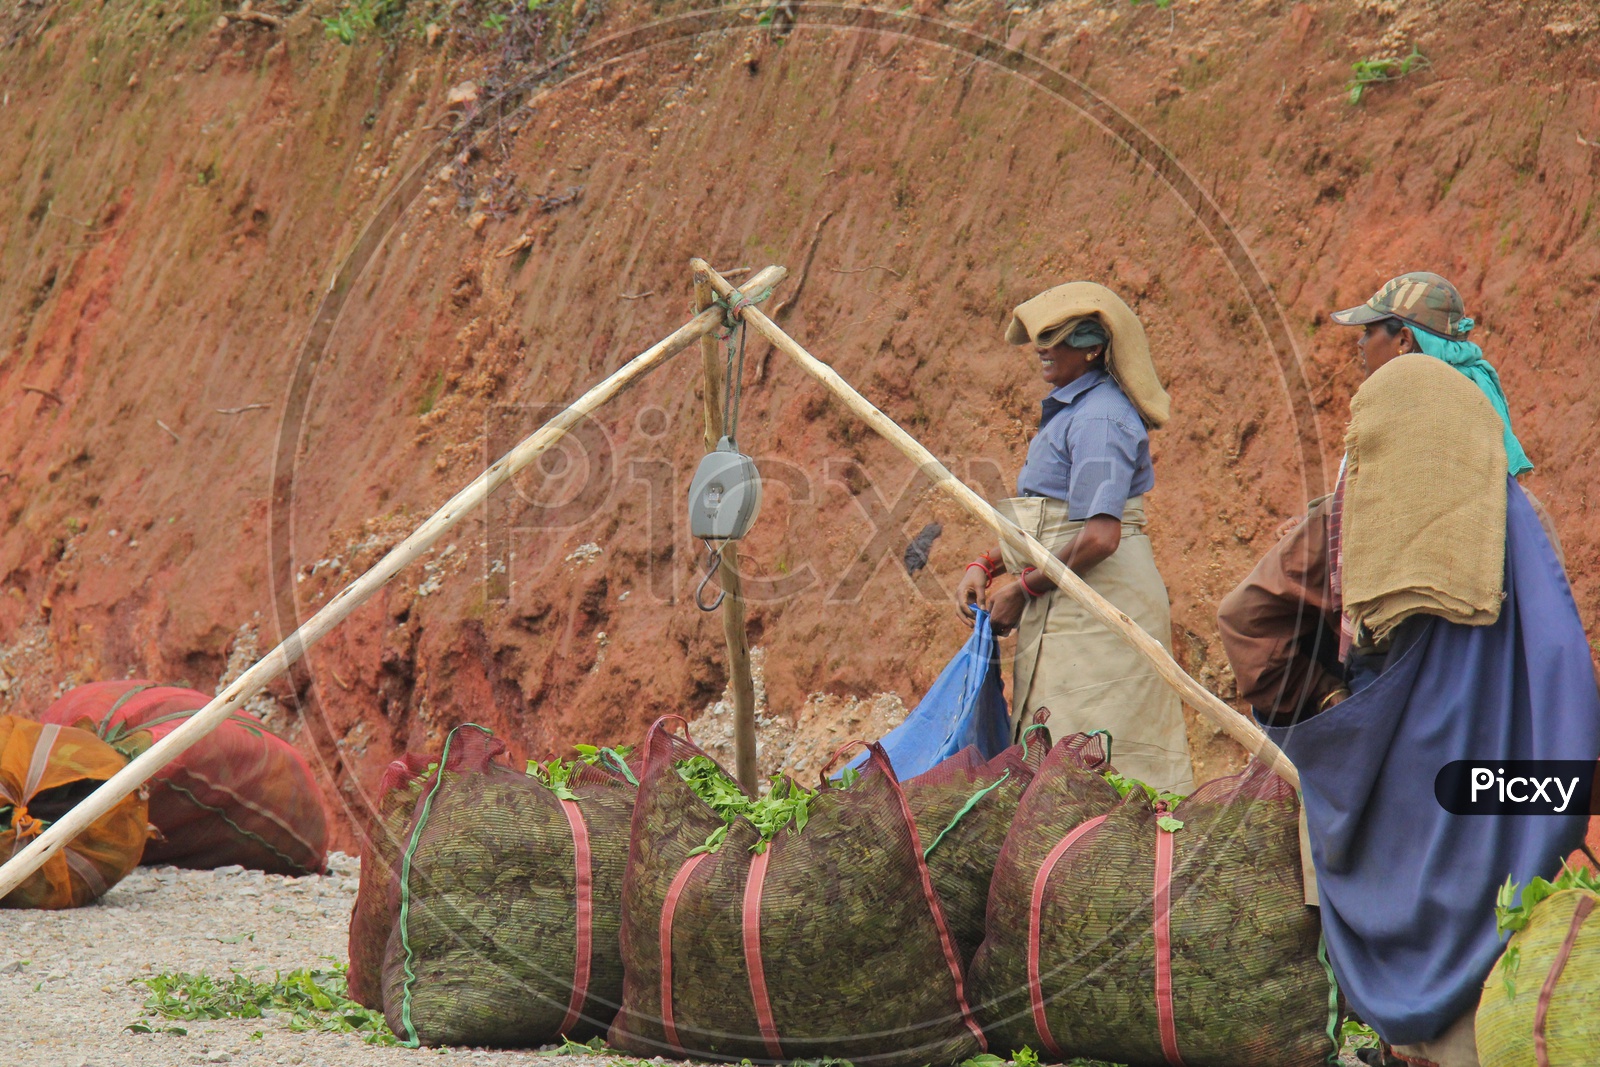 Female Workers in Munnar Tea Plantations